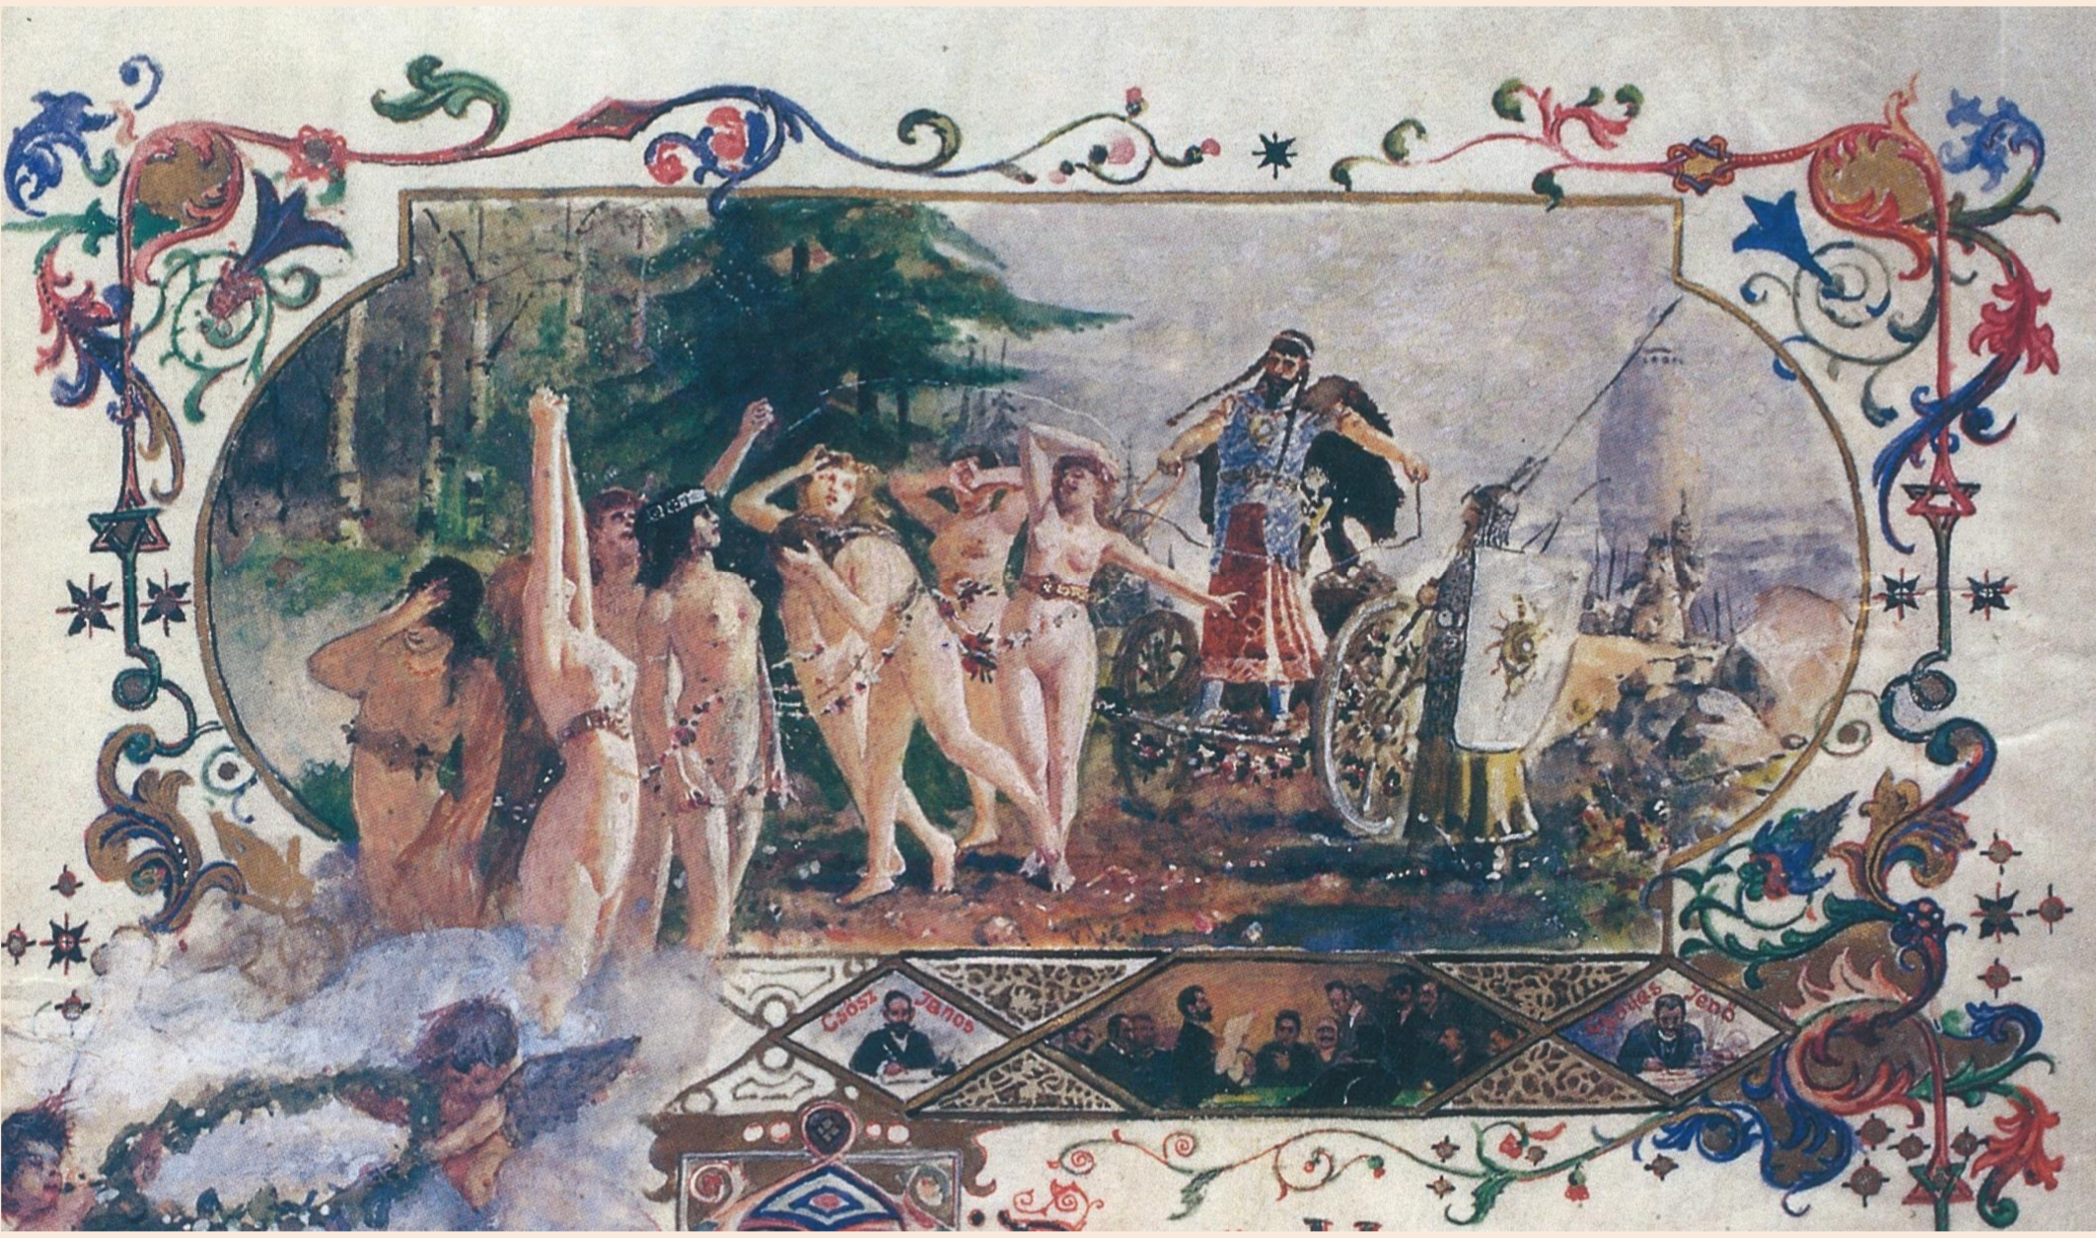 Jenő Gyárfás' artwork